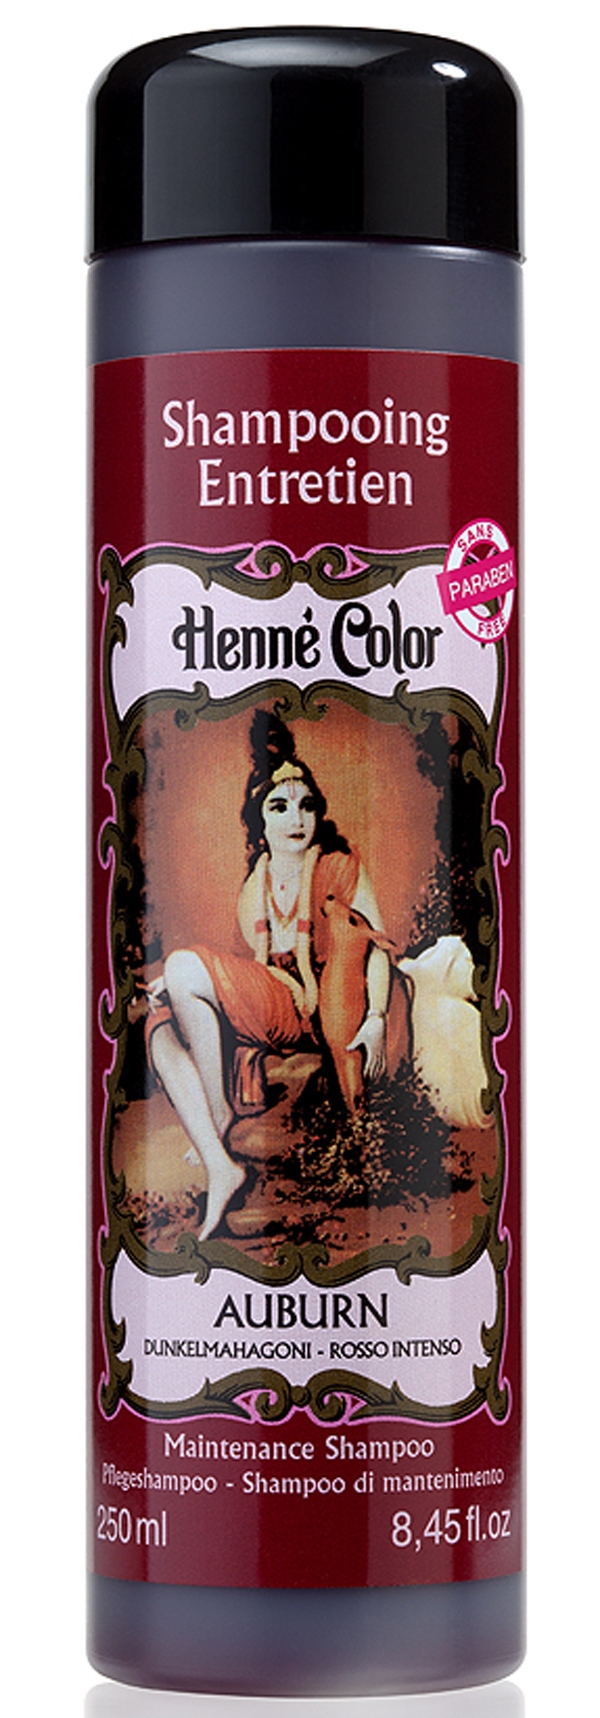 Shampoo di manutenzione Henne Color auburn 250ml